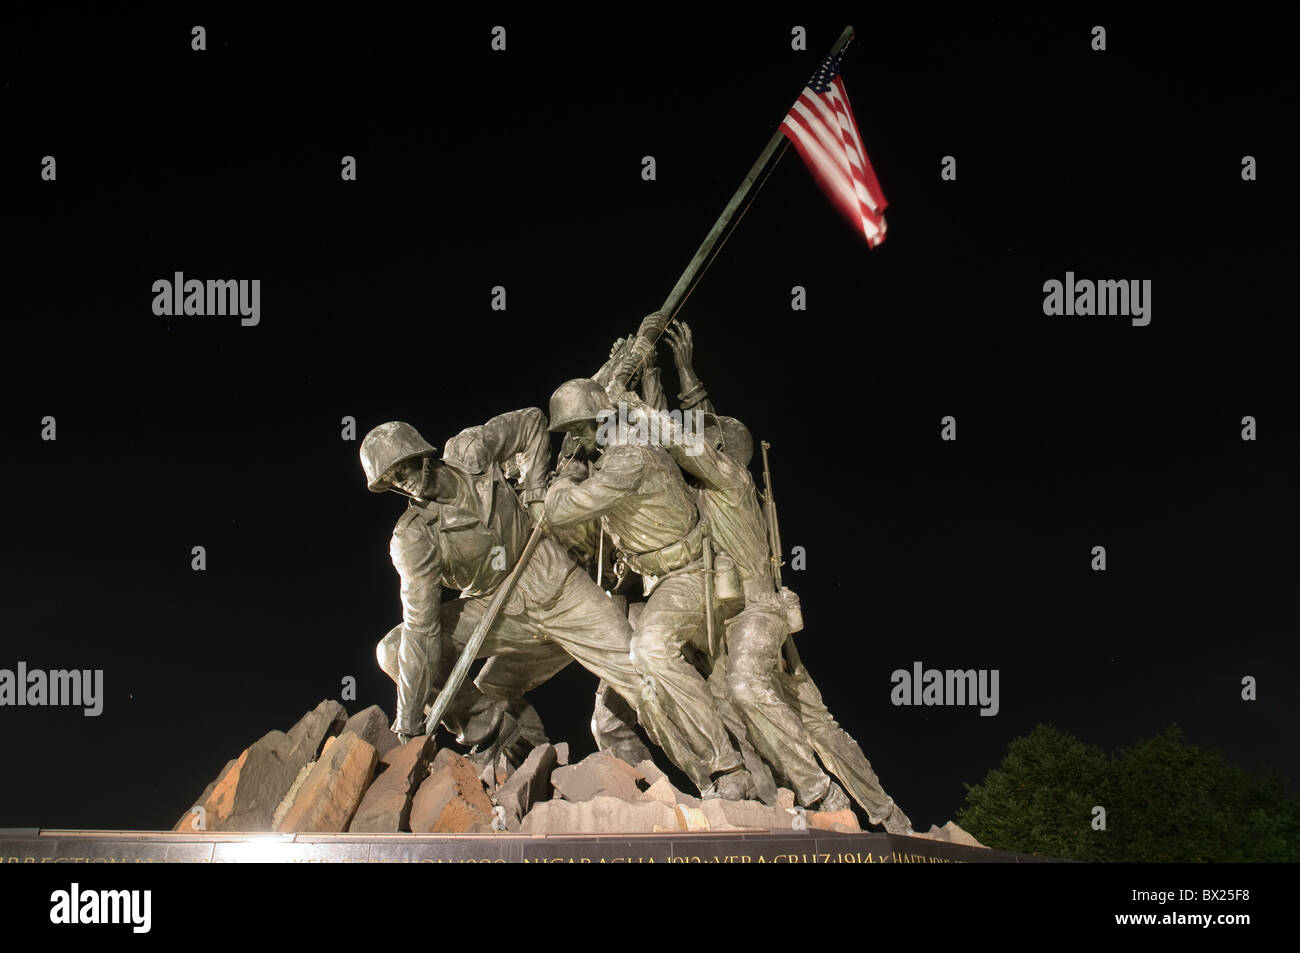 The United States Marine Corp Memorial in Arlington, VA. Stock Photo